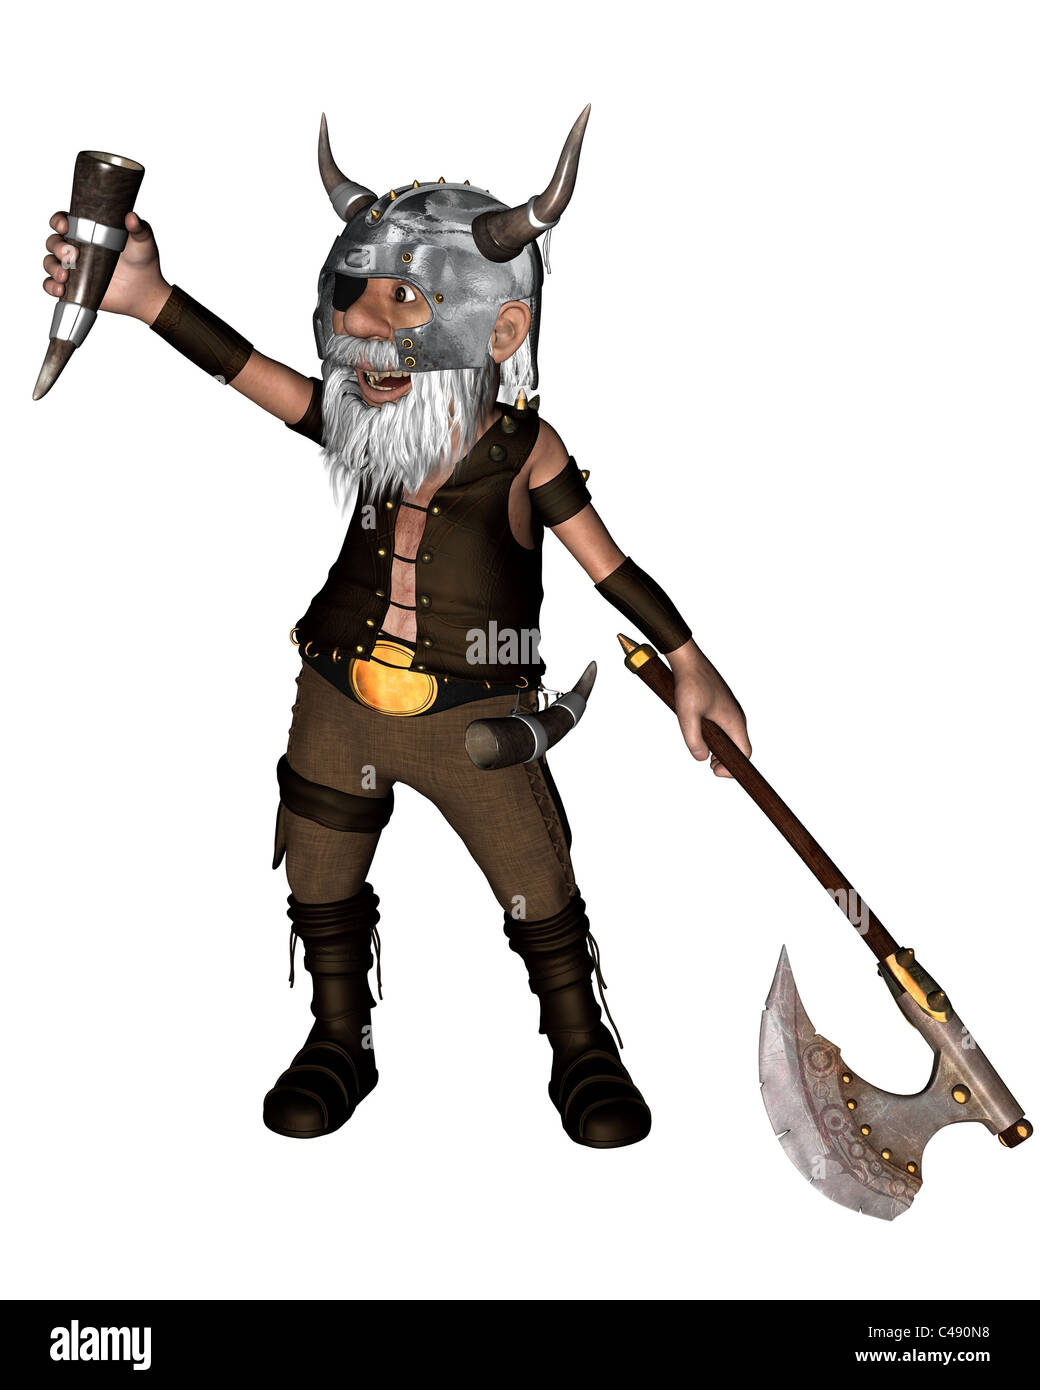 Toon Viking Dwarf with Axe - 1 Stock Photo